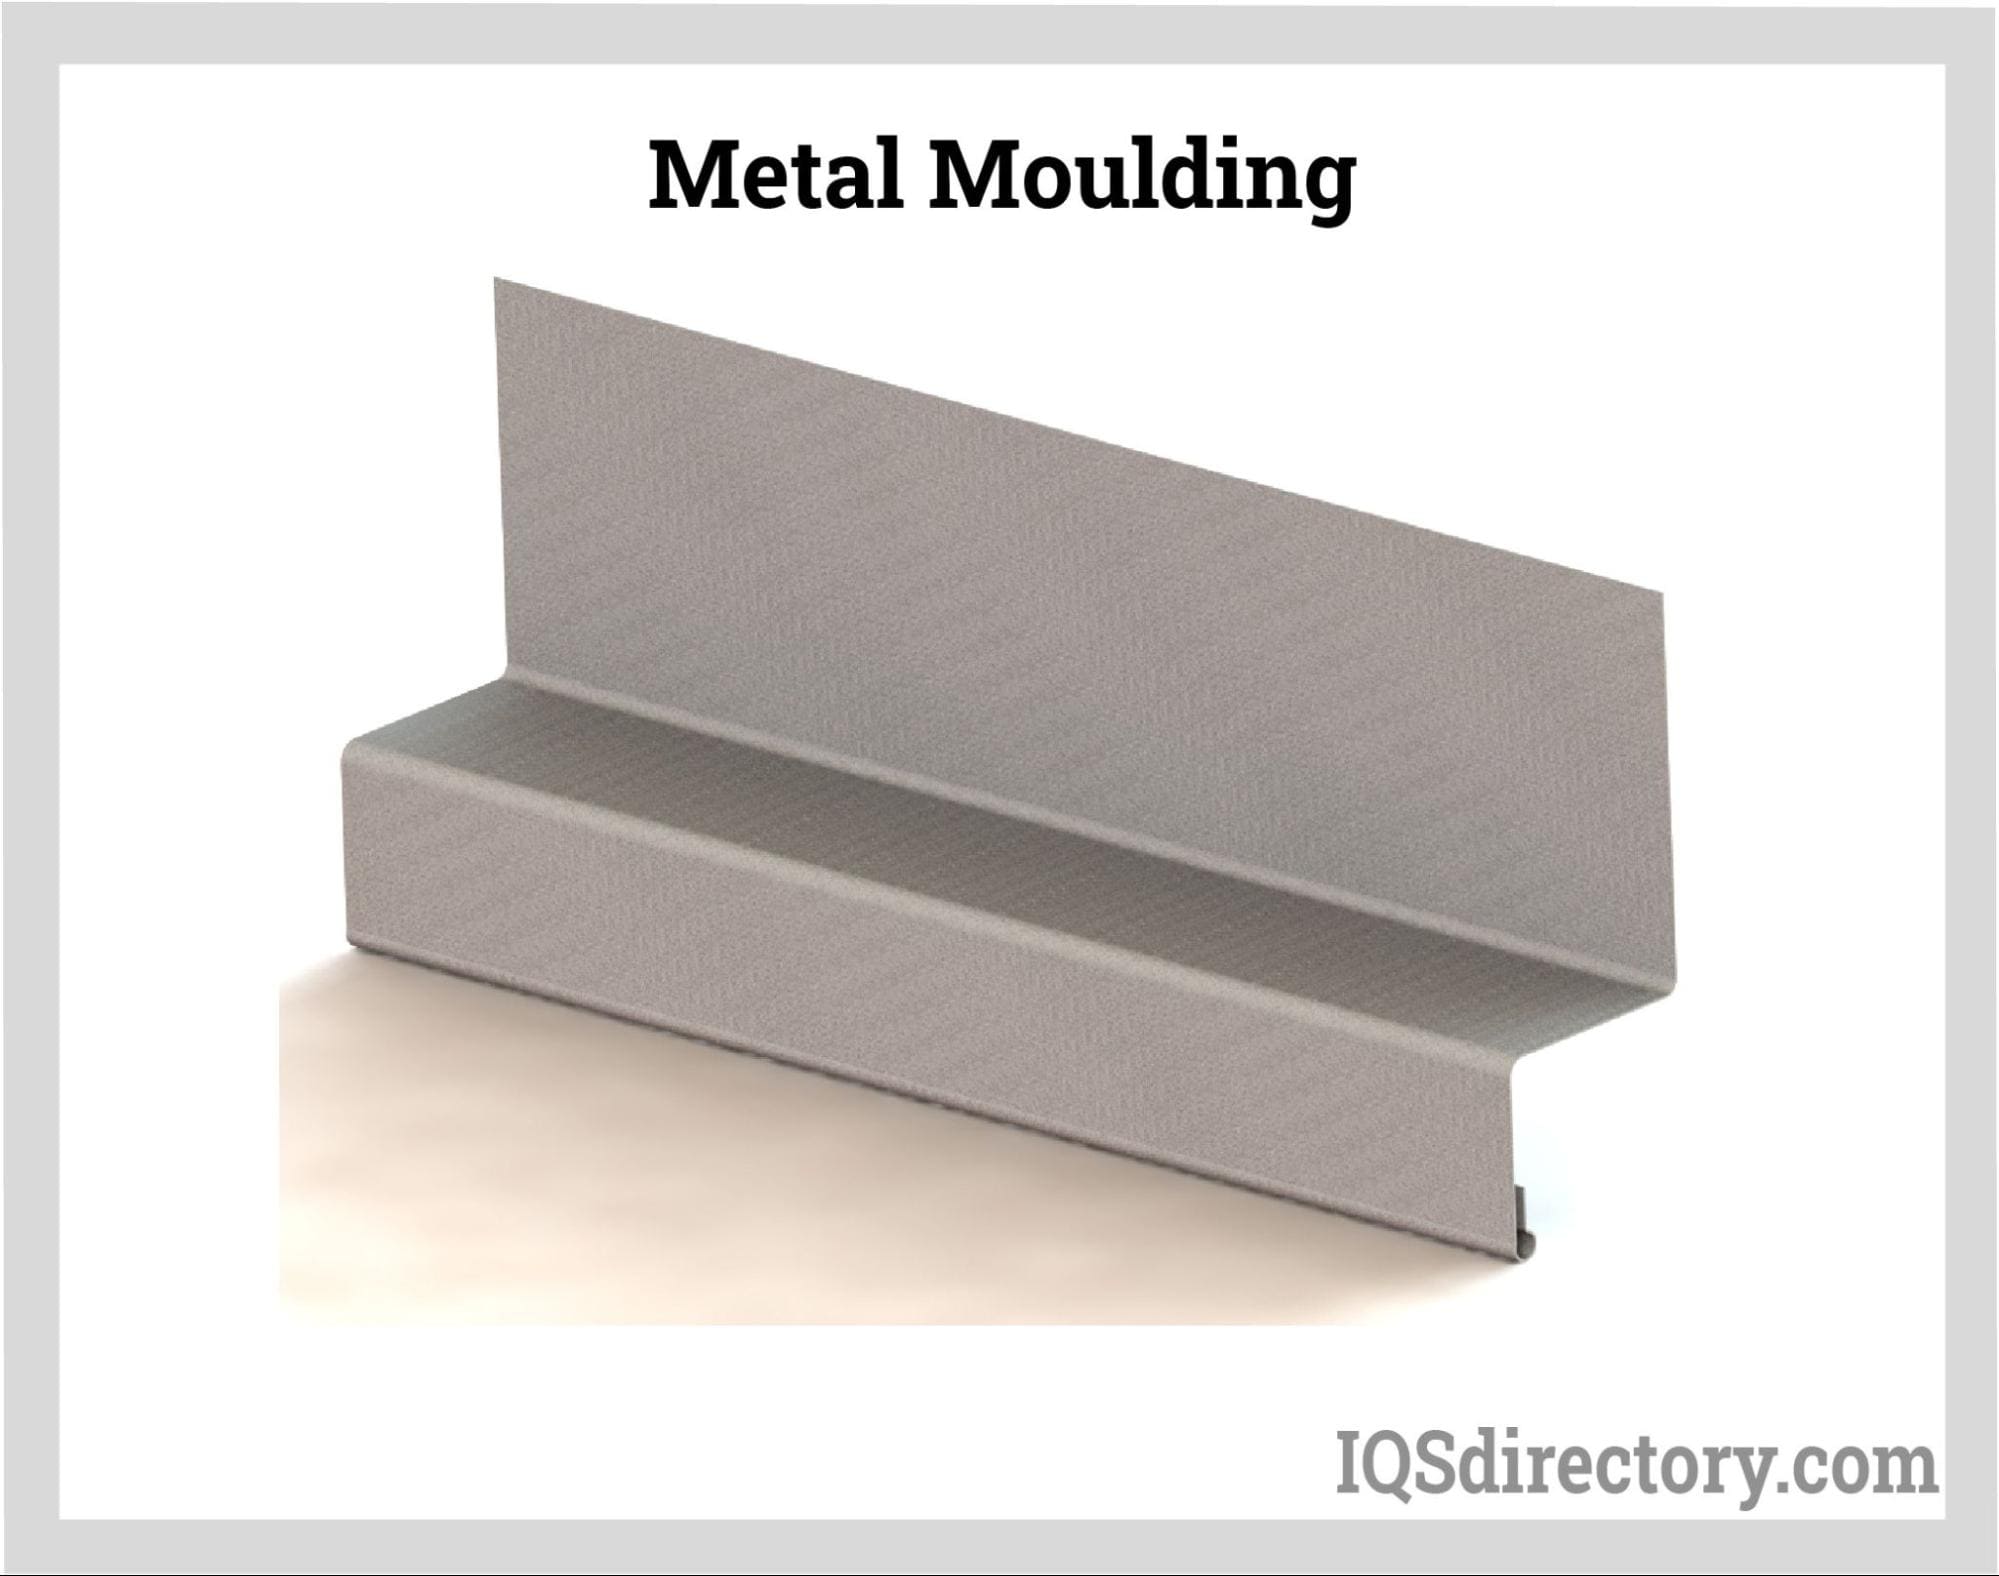 Metal Moulding